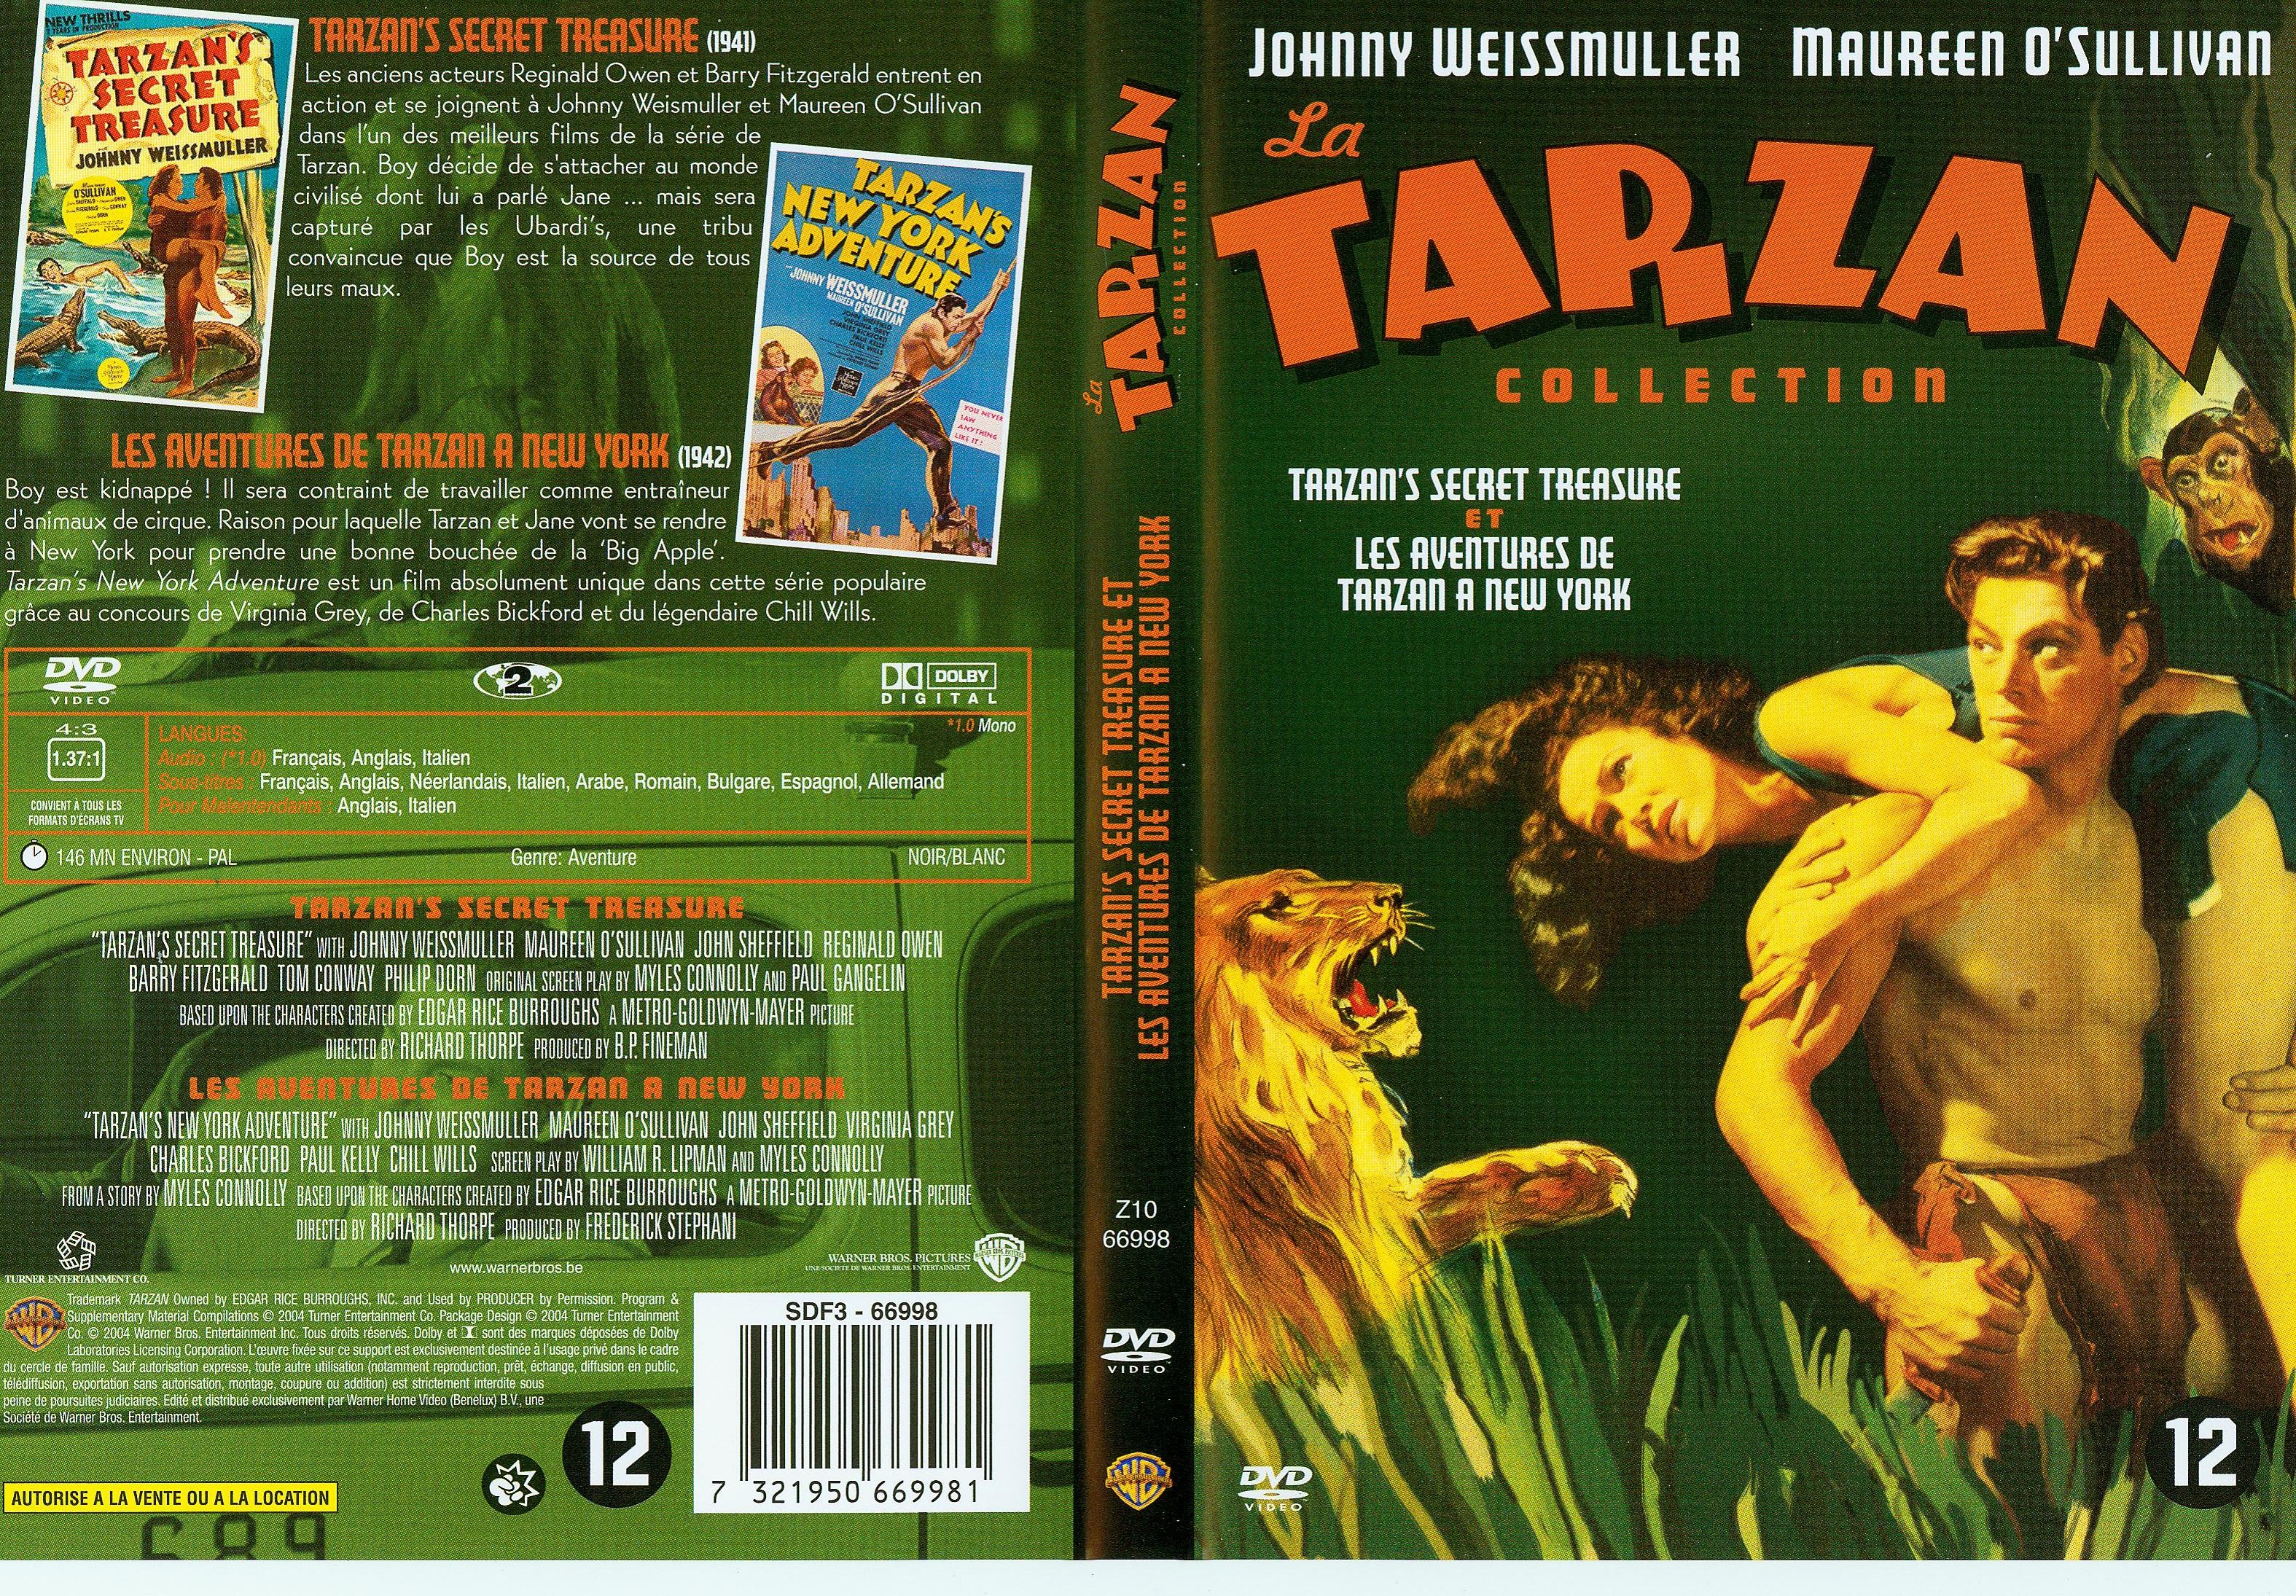 Jaquette DVD Tarzan - Le secret de tarzan - les aventures de tarzan a new york